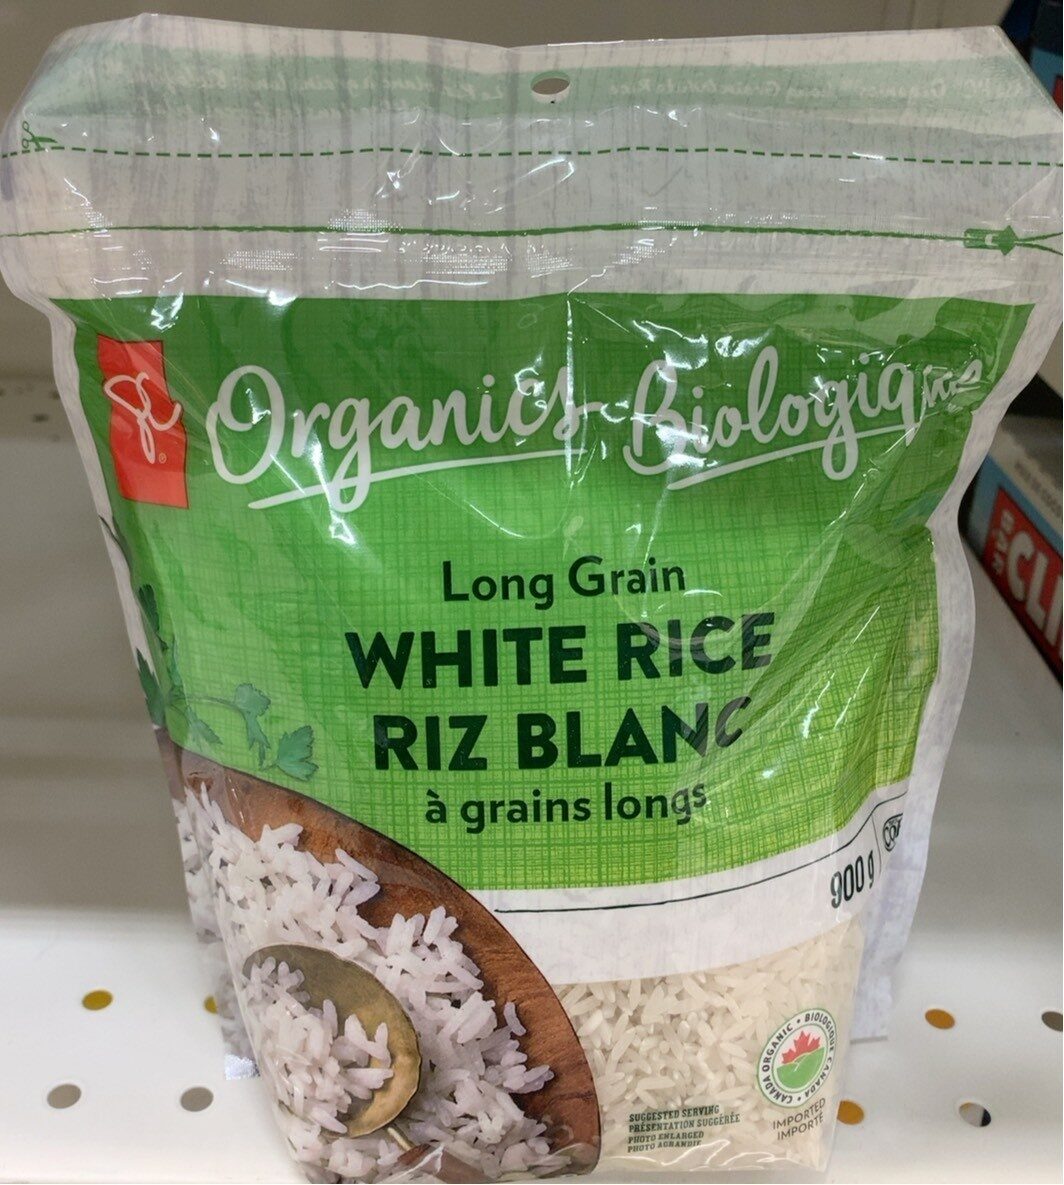 Riz blanc a grains longs - Product - fr